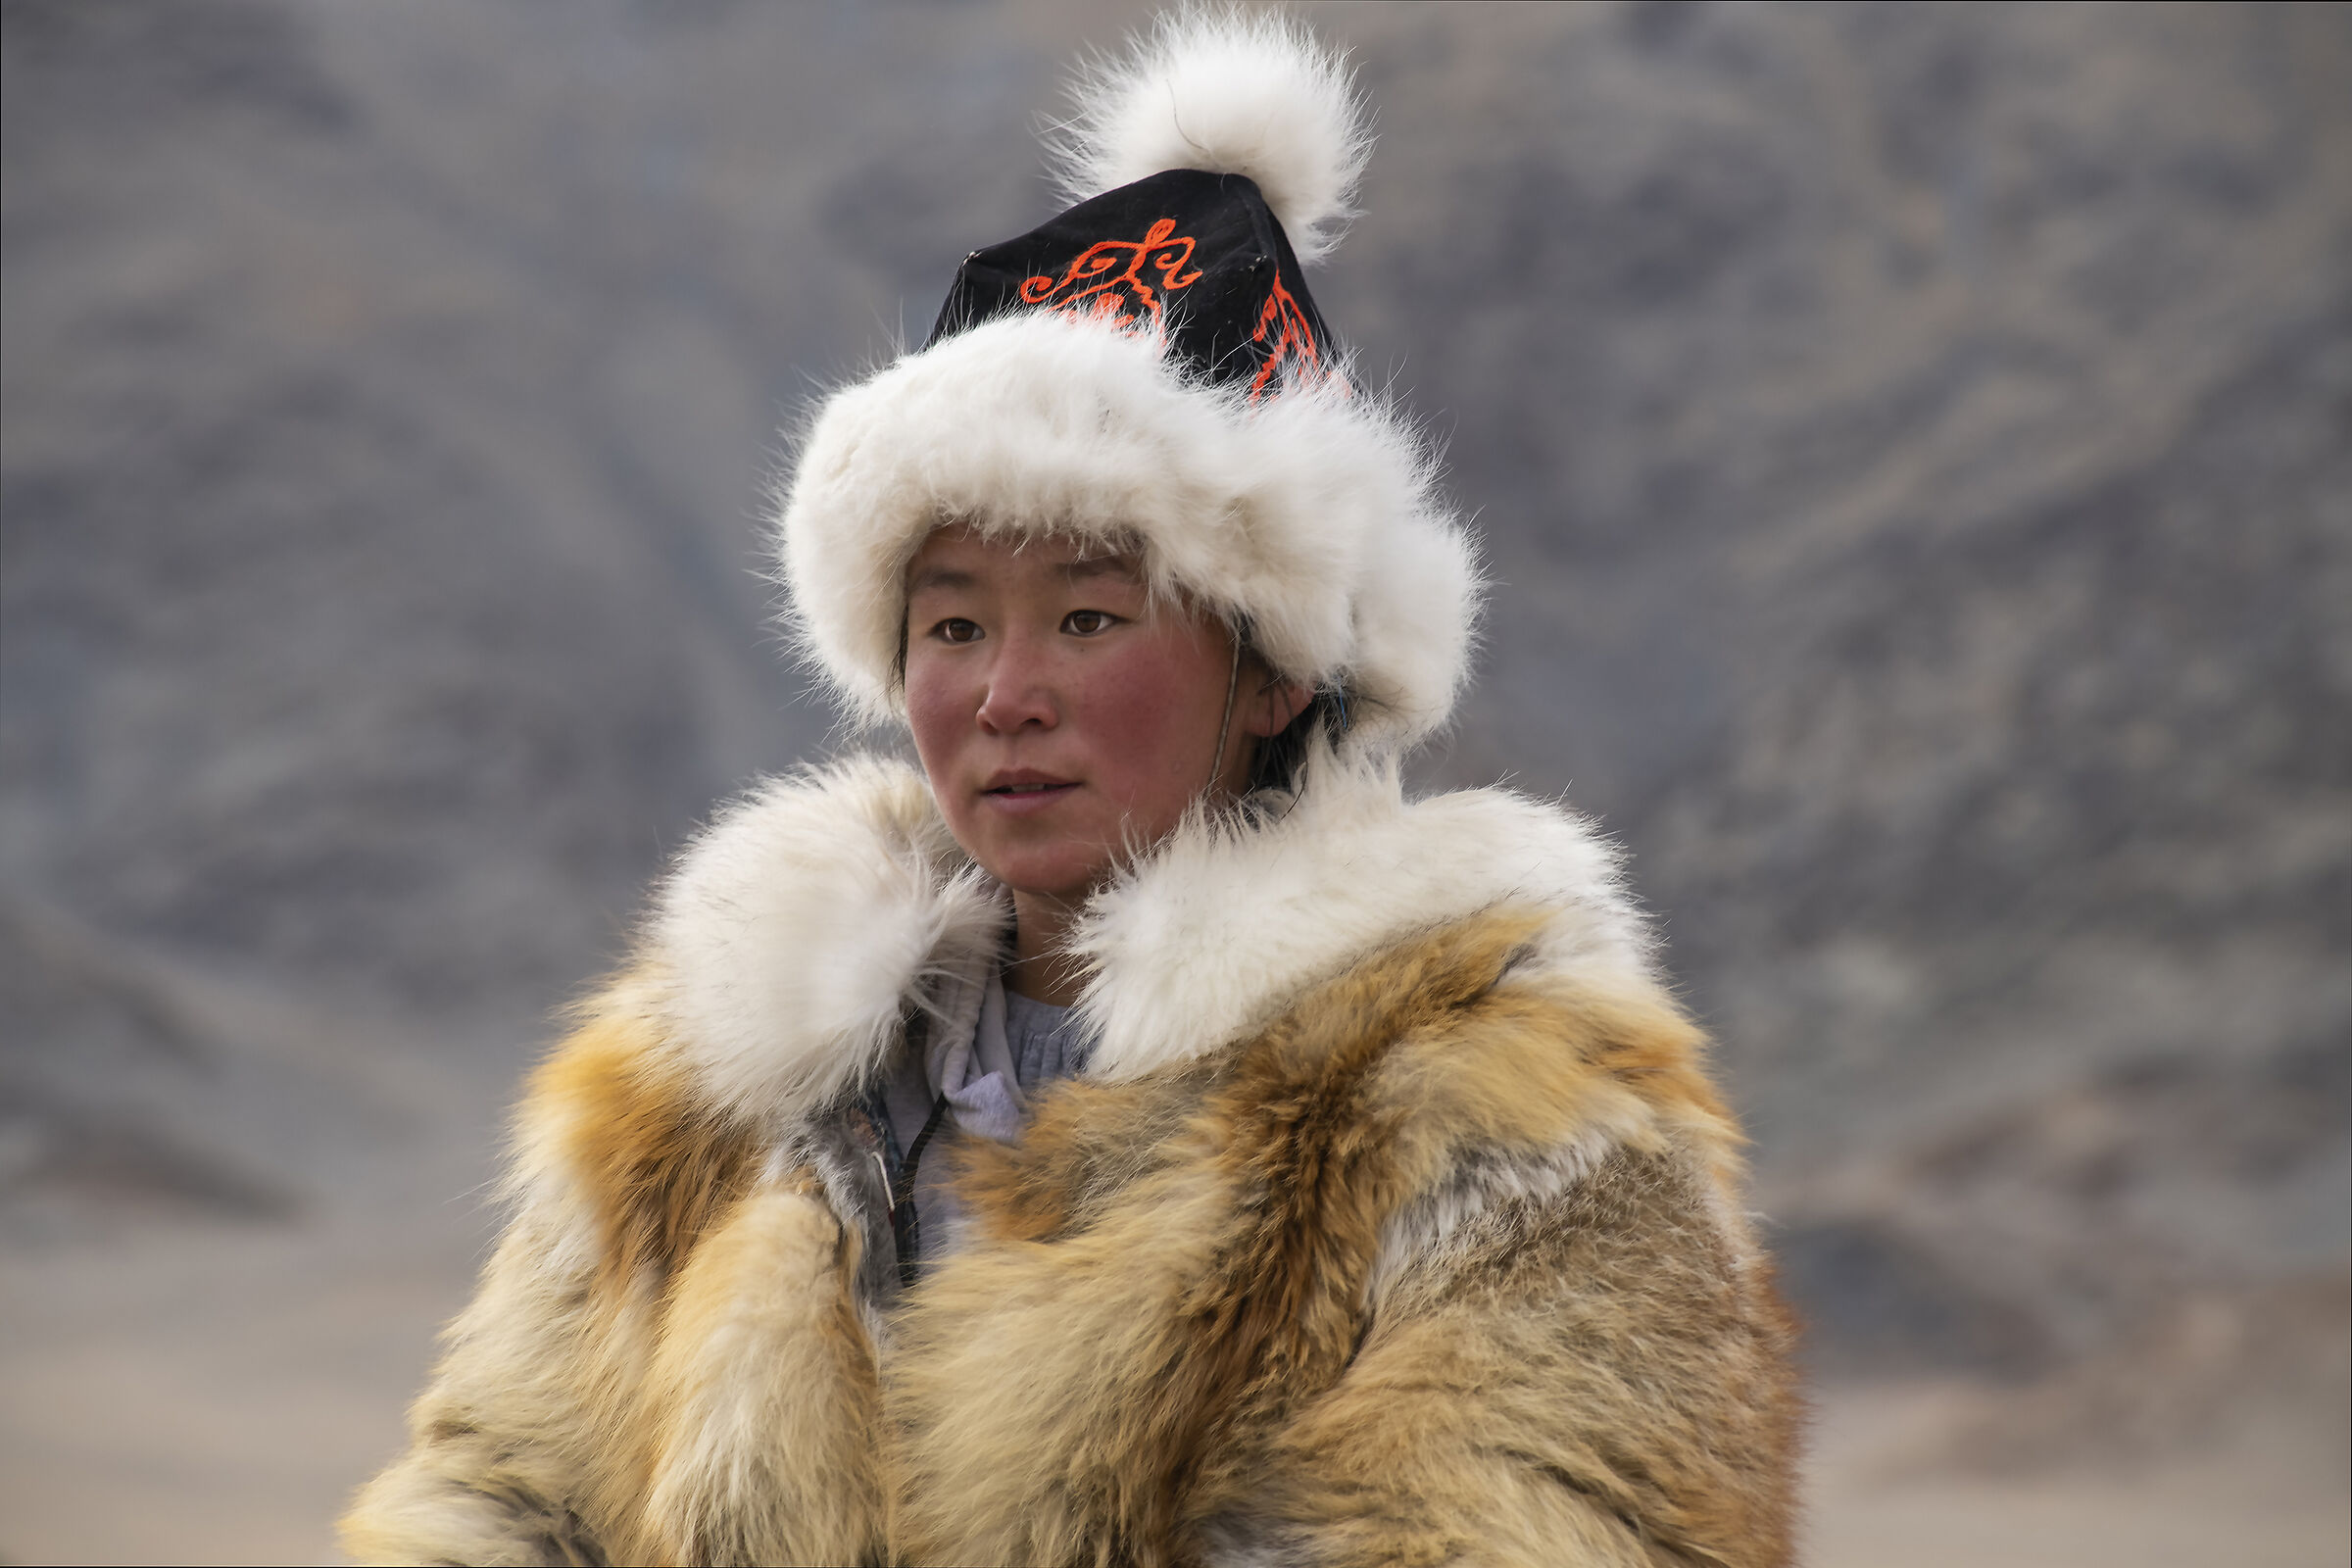 The Mongolian Princess...